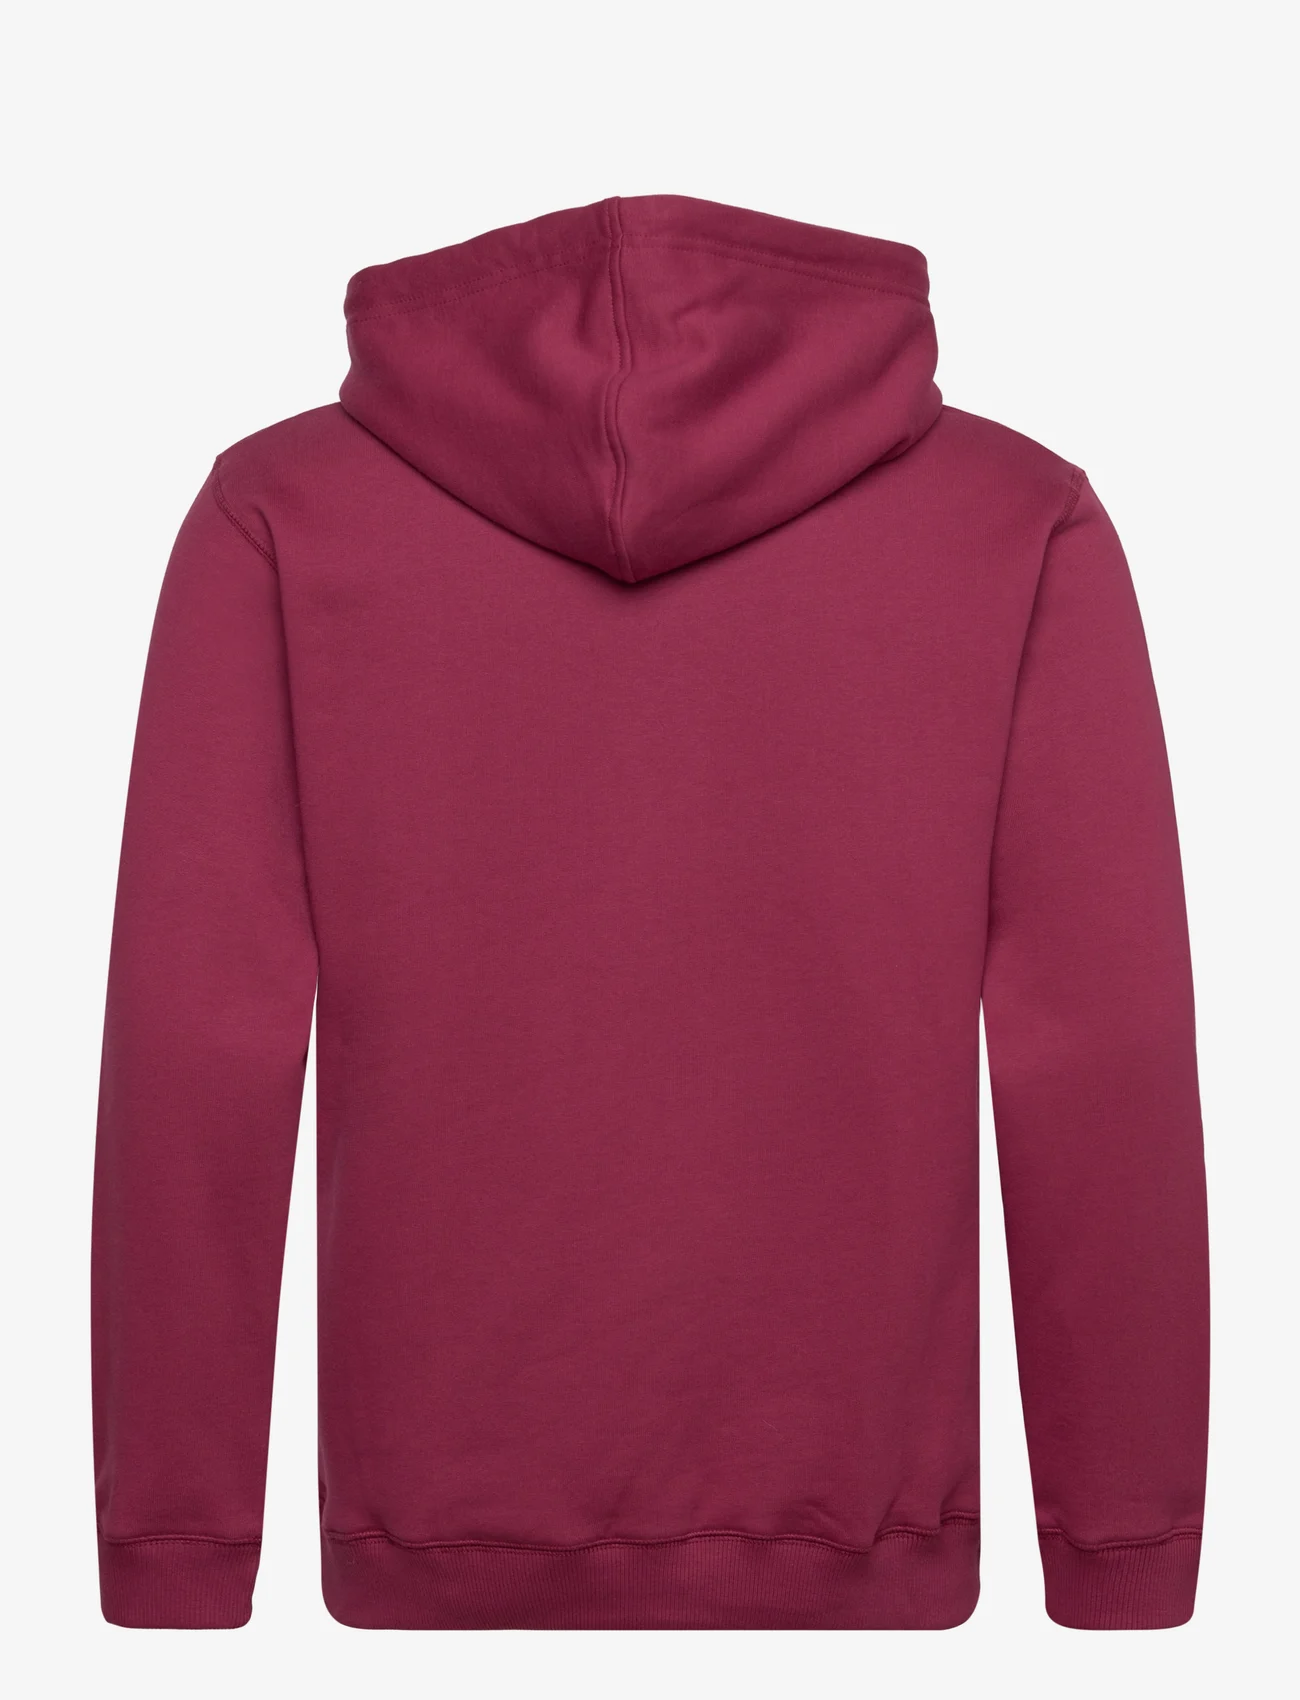 Makia - Folke Hooded Sweatshirt - sweatshirts - cranberry - 1